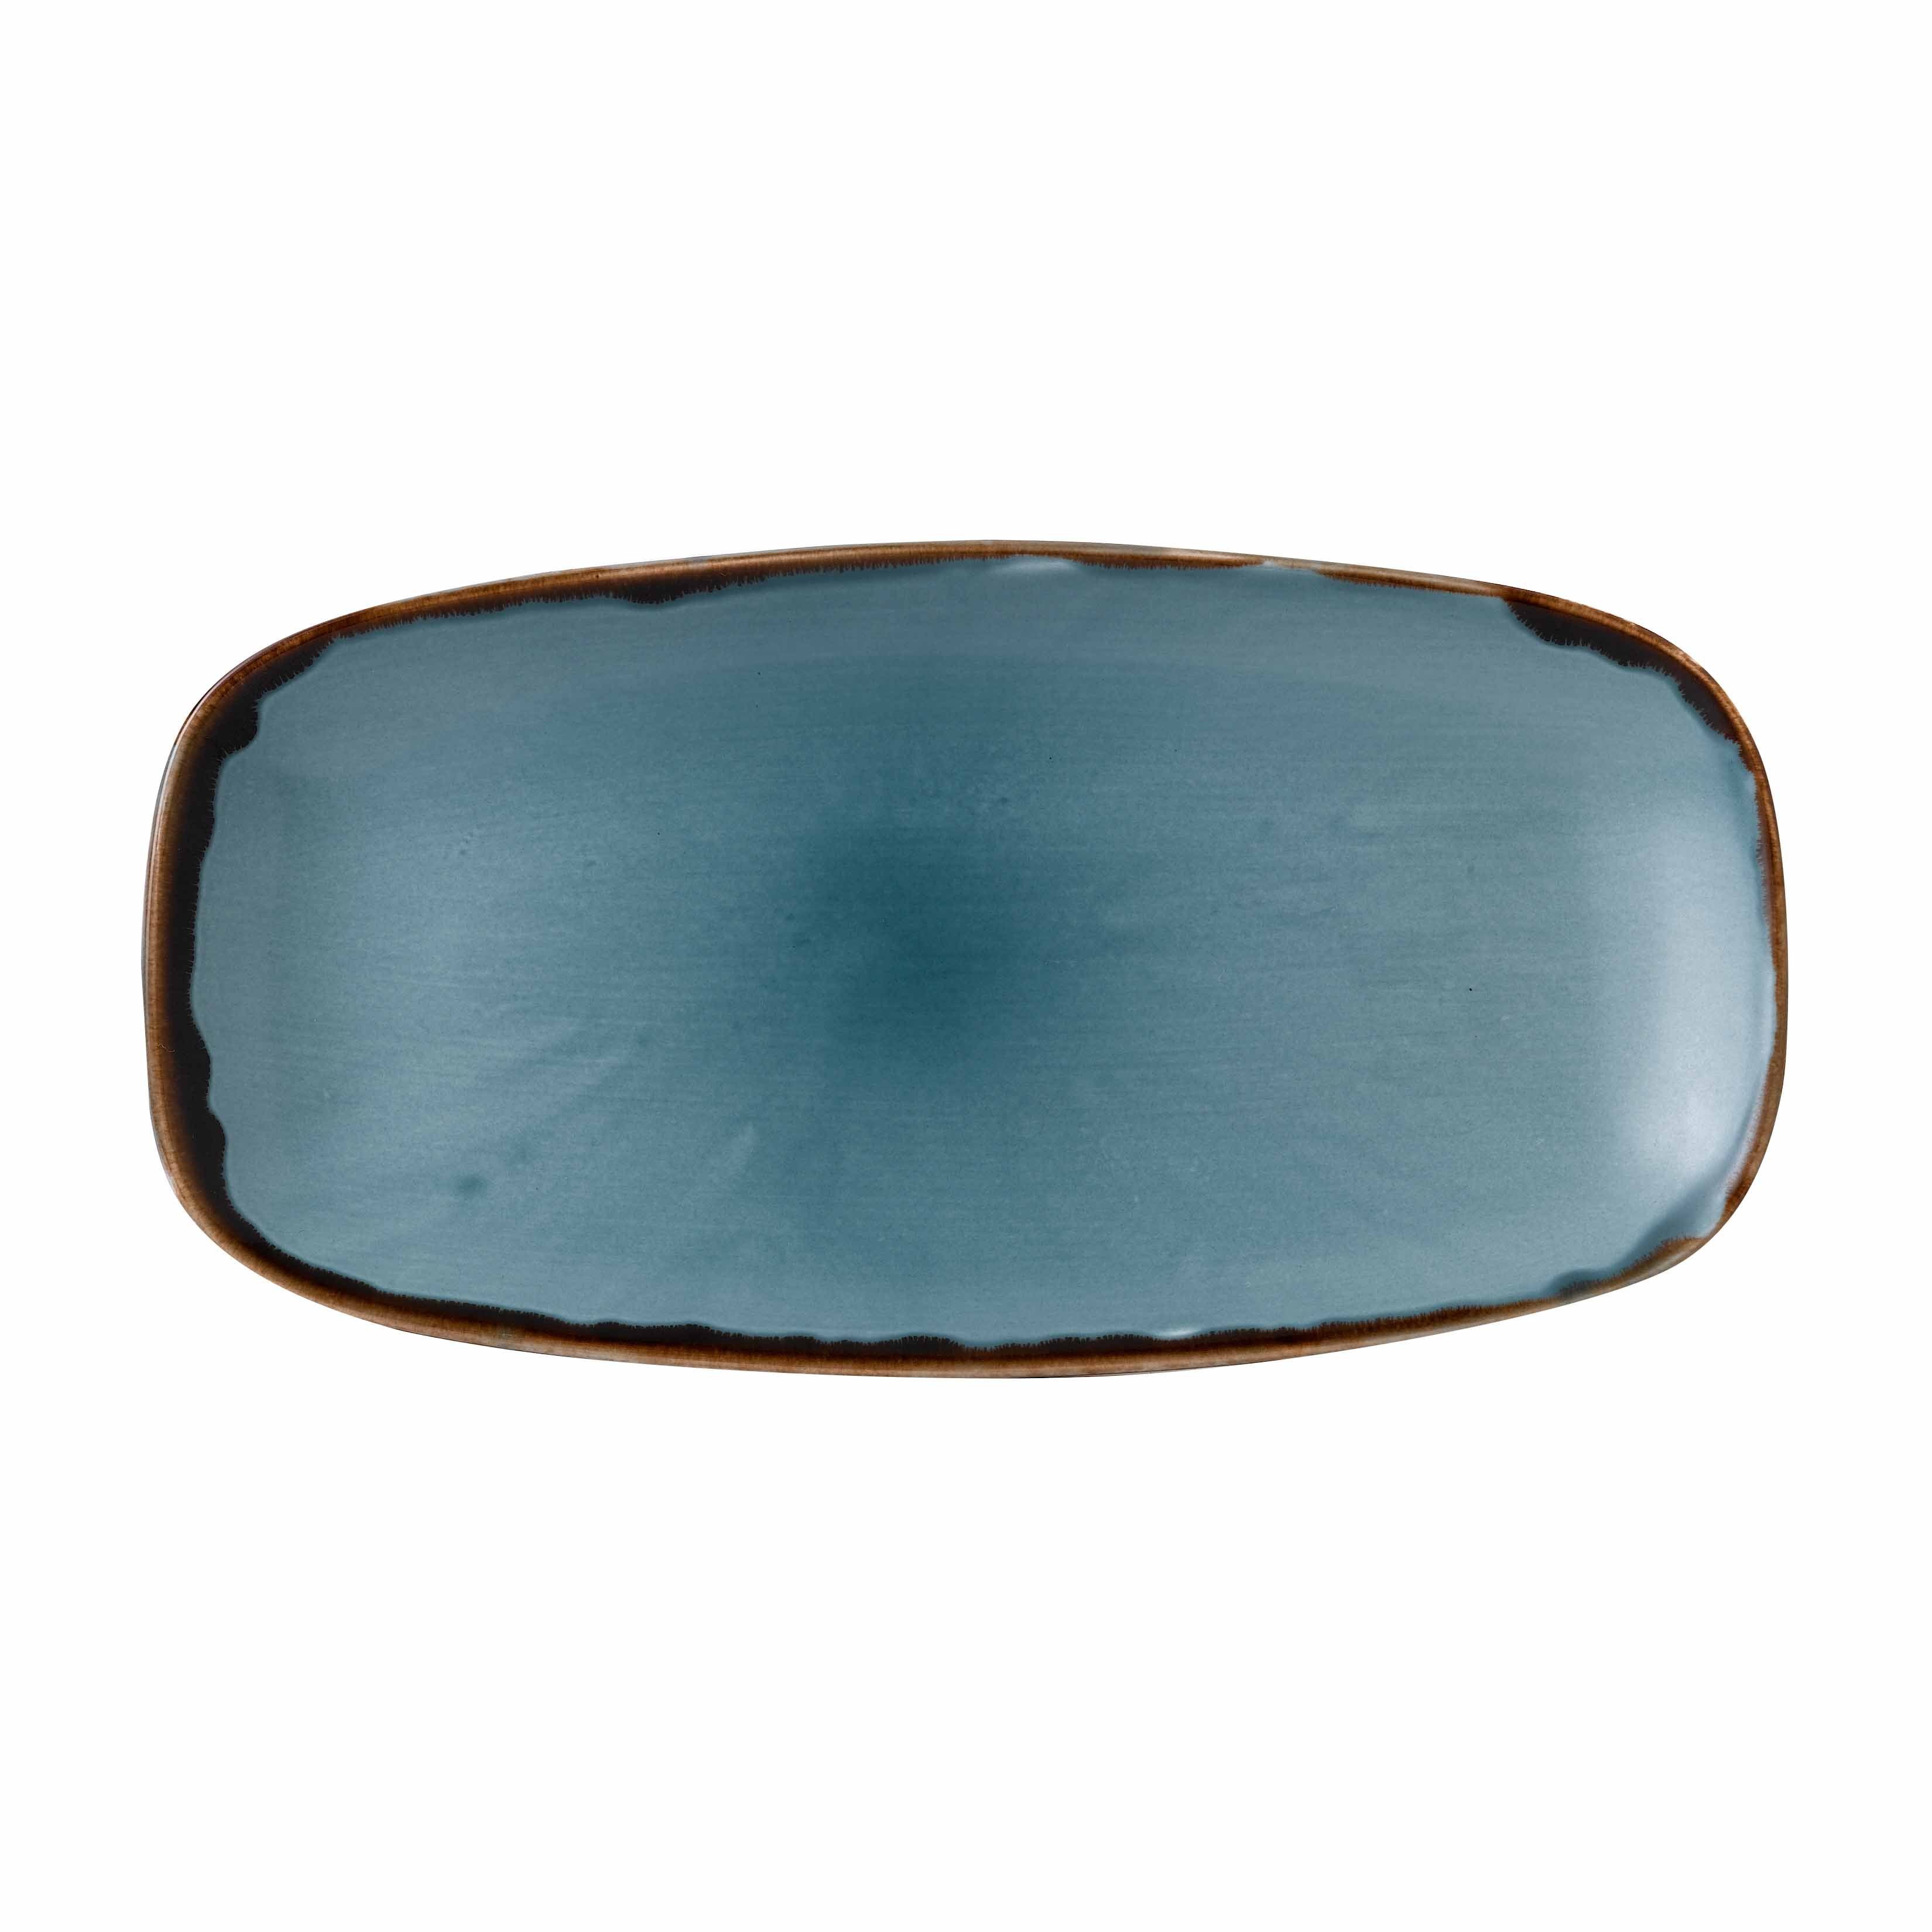 Dudson Servierplatte Dudson Harvest Blue Chefs Oblong Platte 29.8X15.3Cm Oval Blau 12er, Feinstes Porzellan